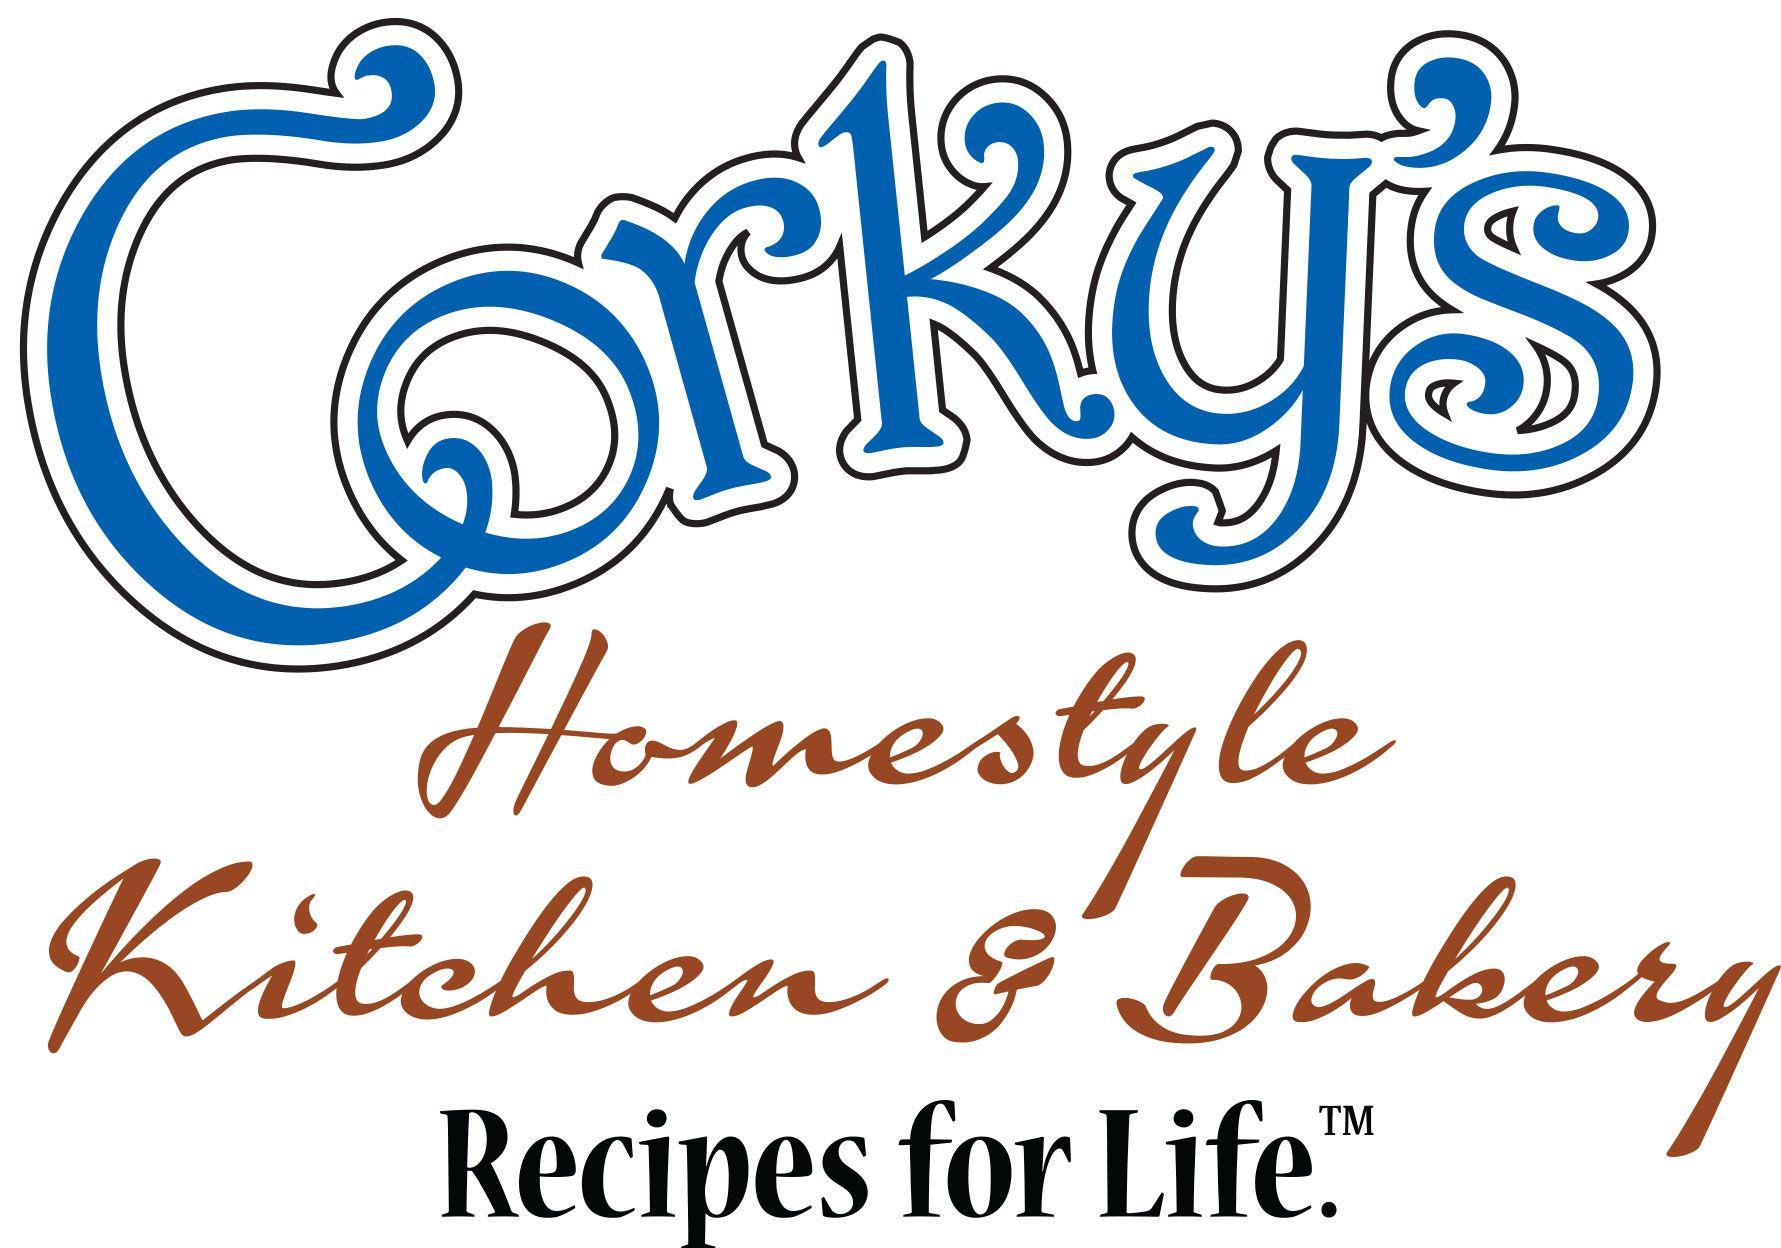 Corky's Logo - Corky's Favorite Breakfast